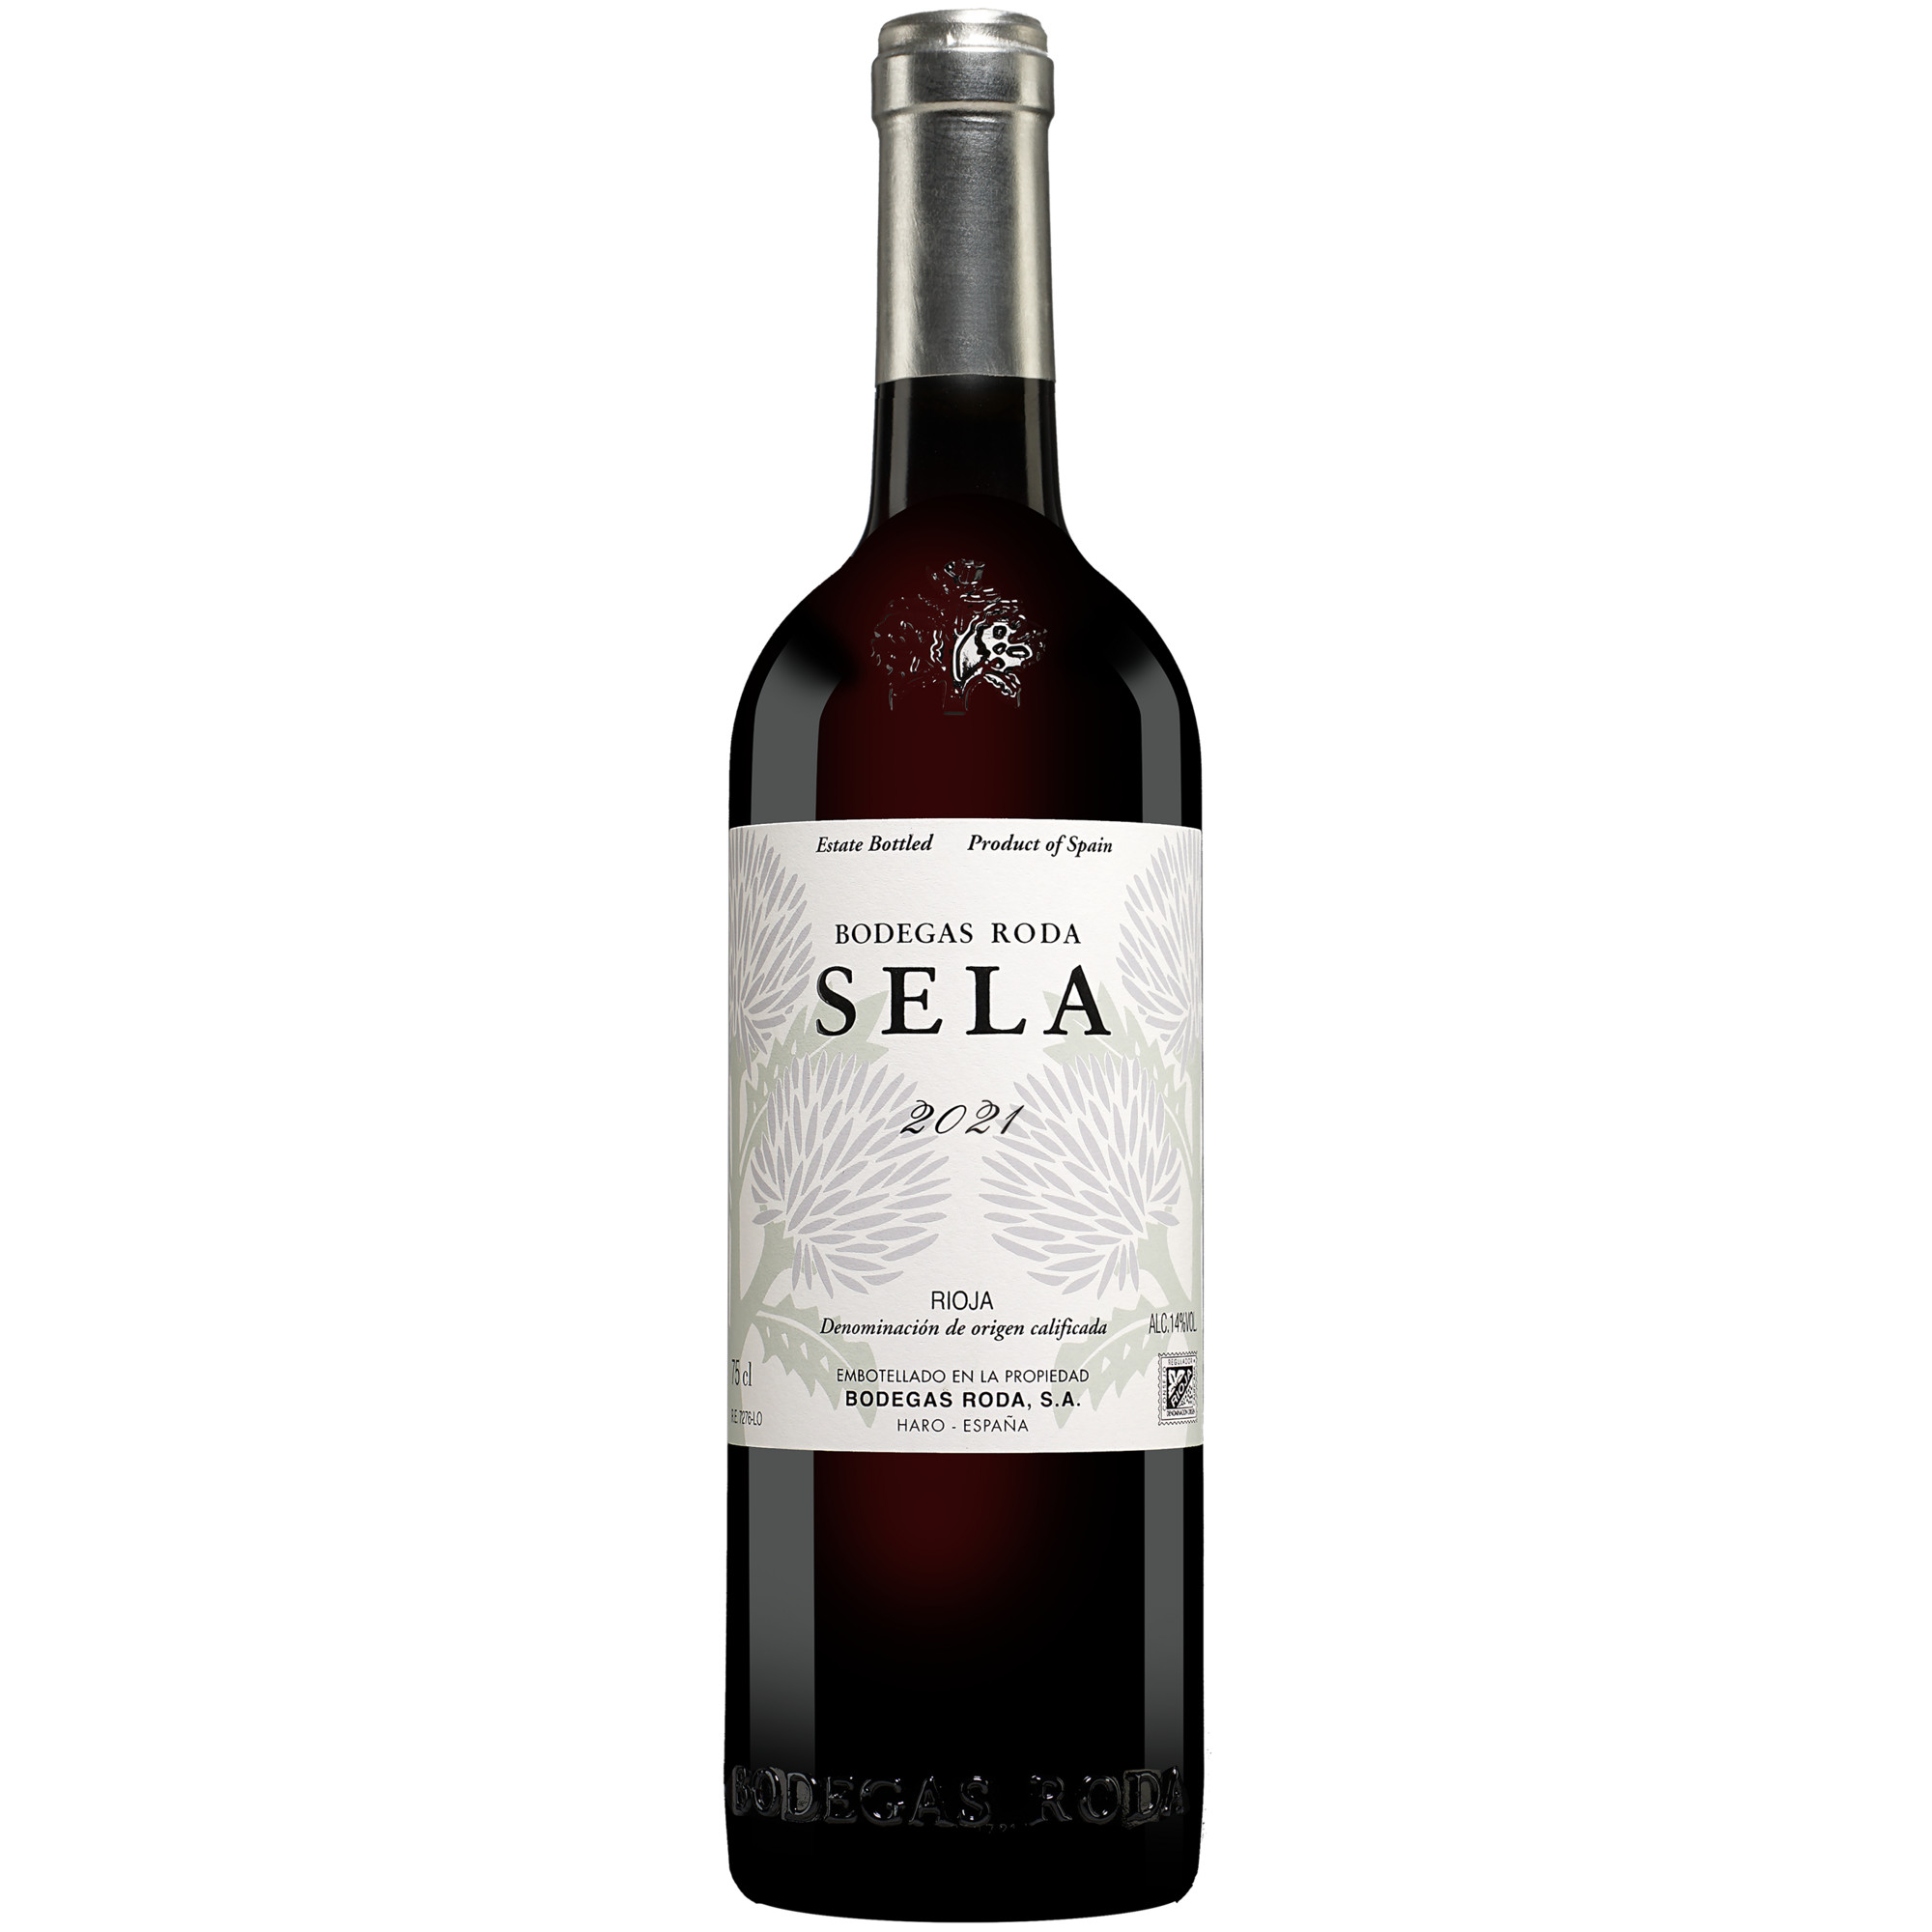 Roda »Sela« 2021  014% Vol. Rotwein Trocken aus Spanien